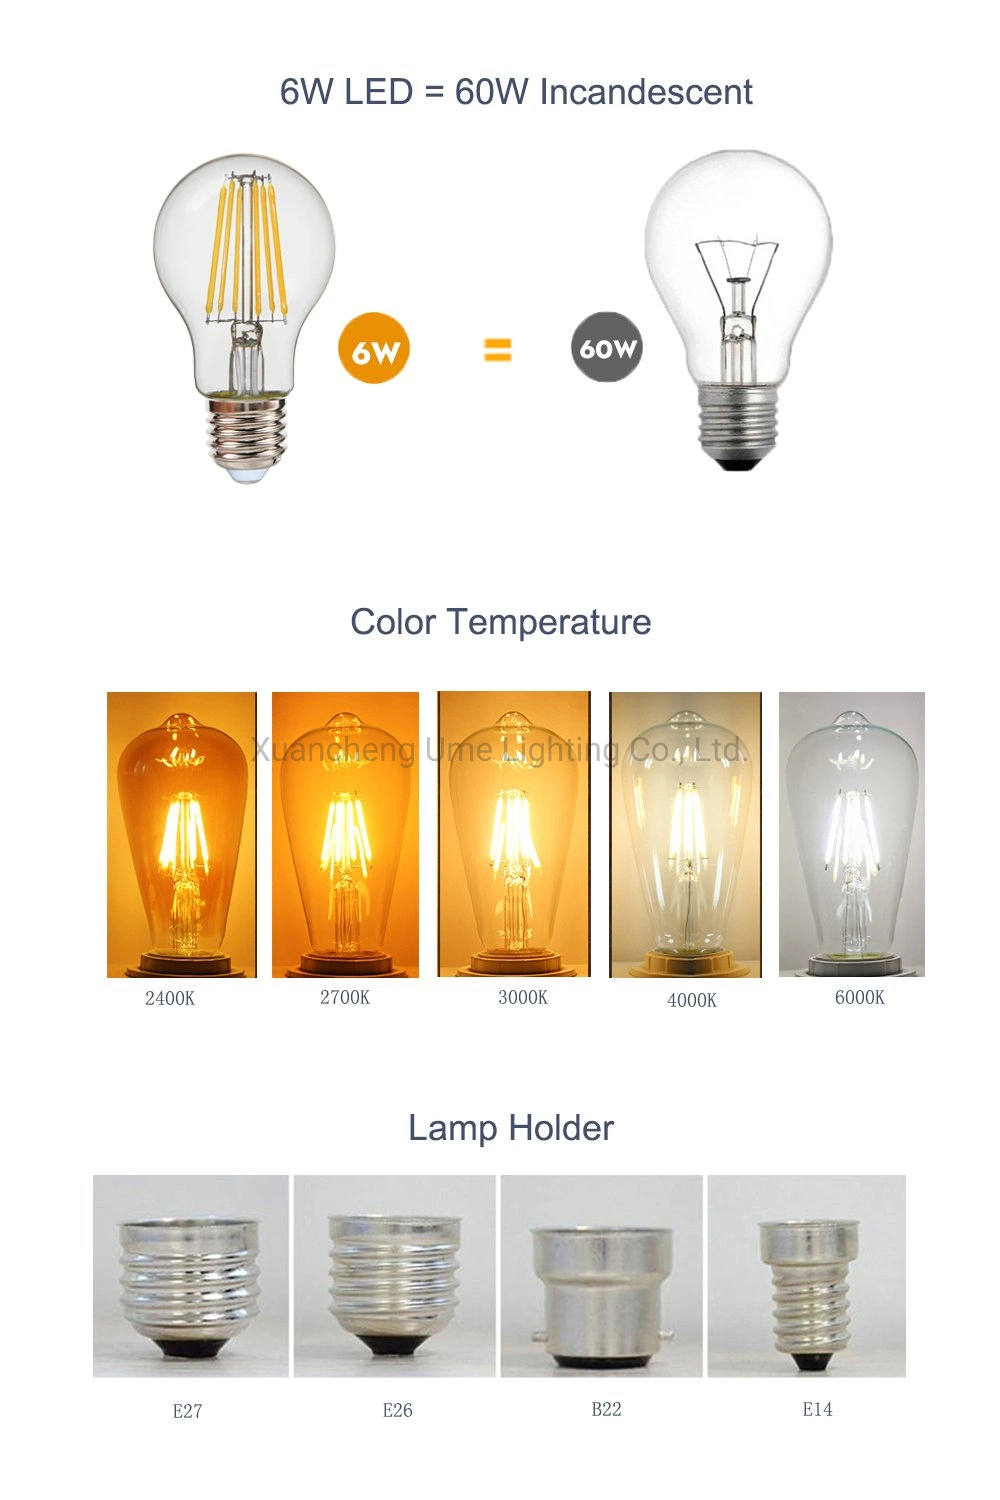 LED Edison Bulb Dimmable, Daylight White 5000K, 60W Equivalent, 6W, 800 Lumens High Brightness, St64 Vintage Filament Light Bulb, LED Antique Bulbs